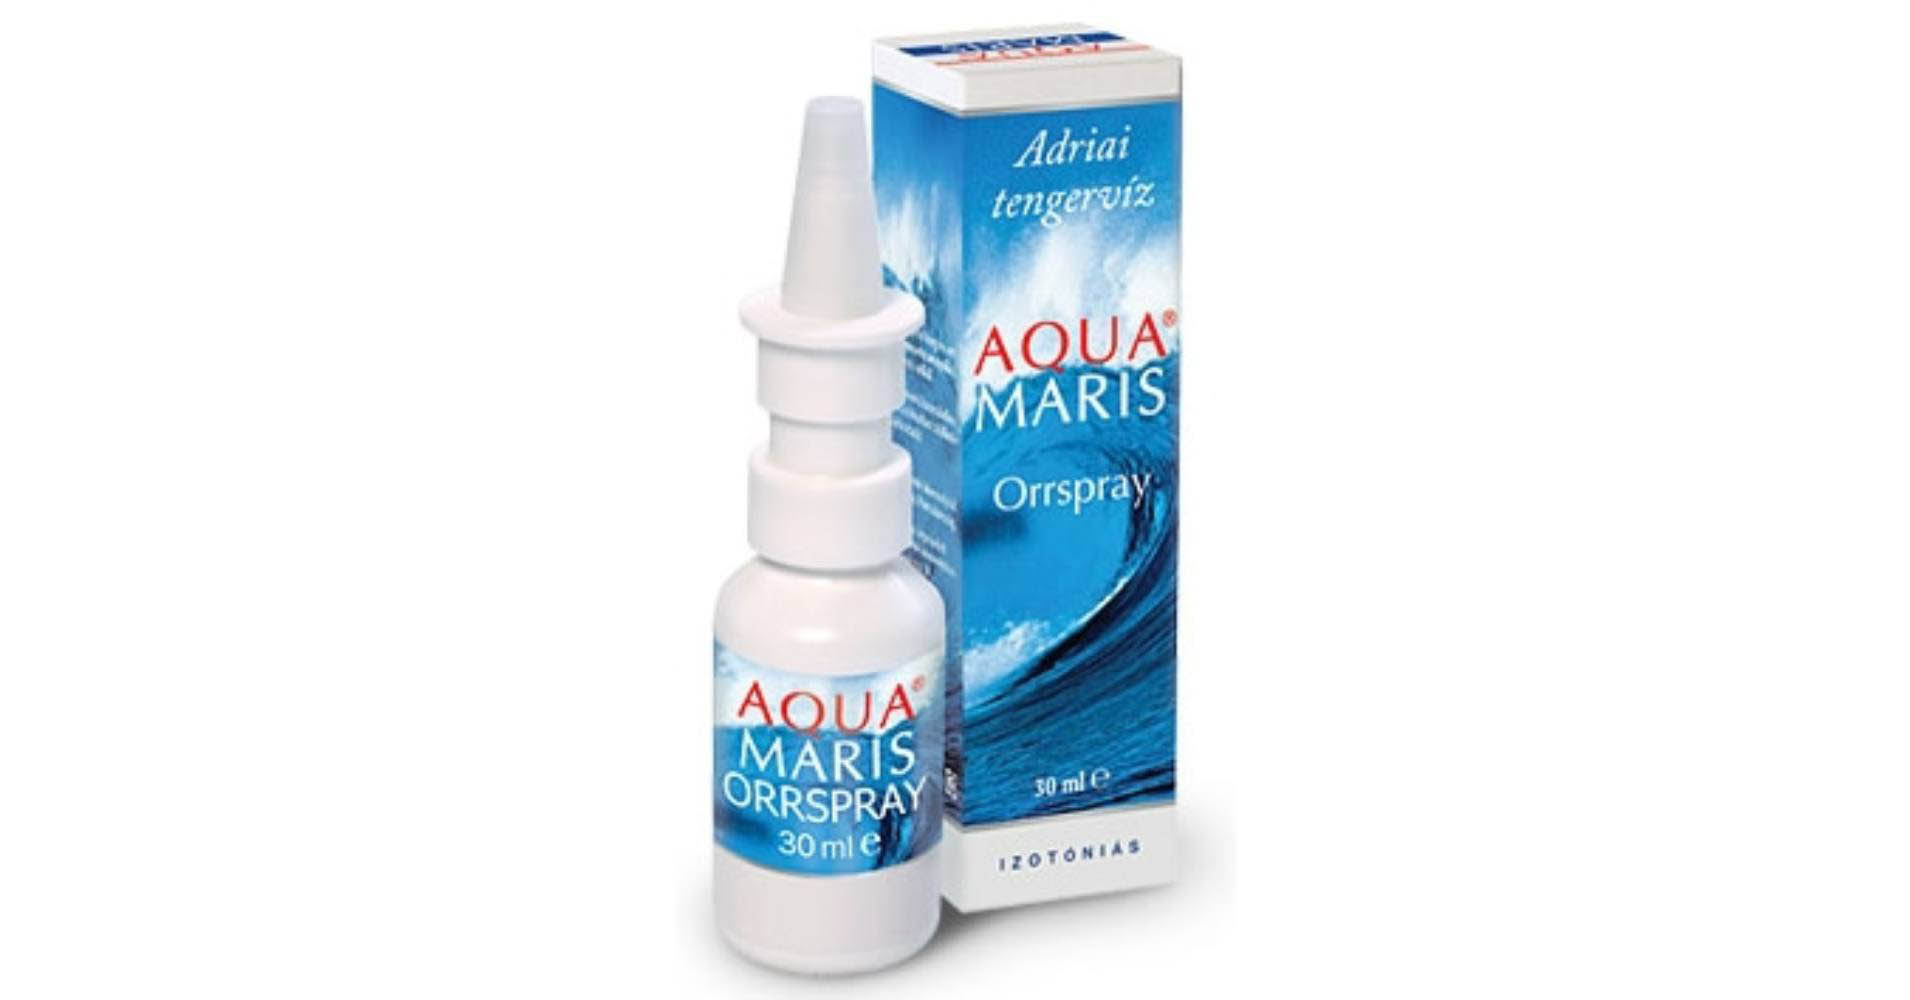 Aqua Maris orrspray